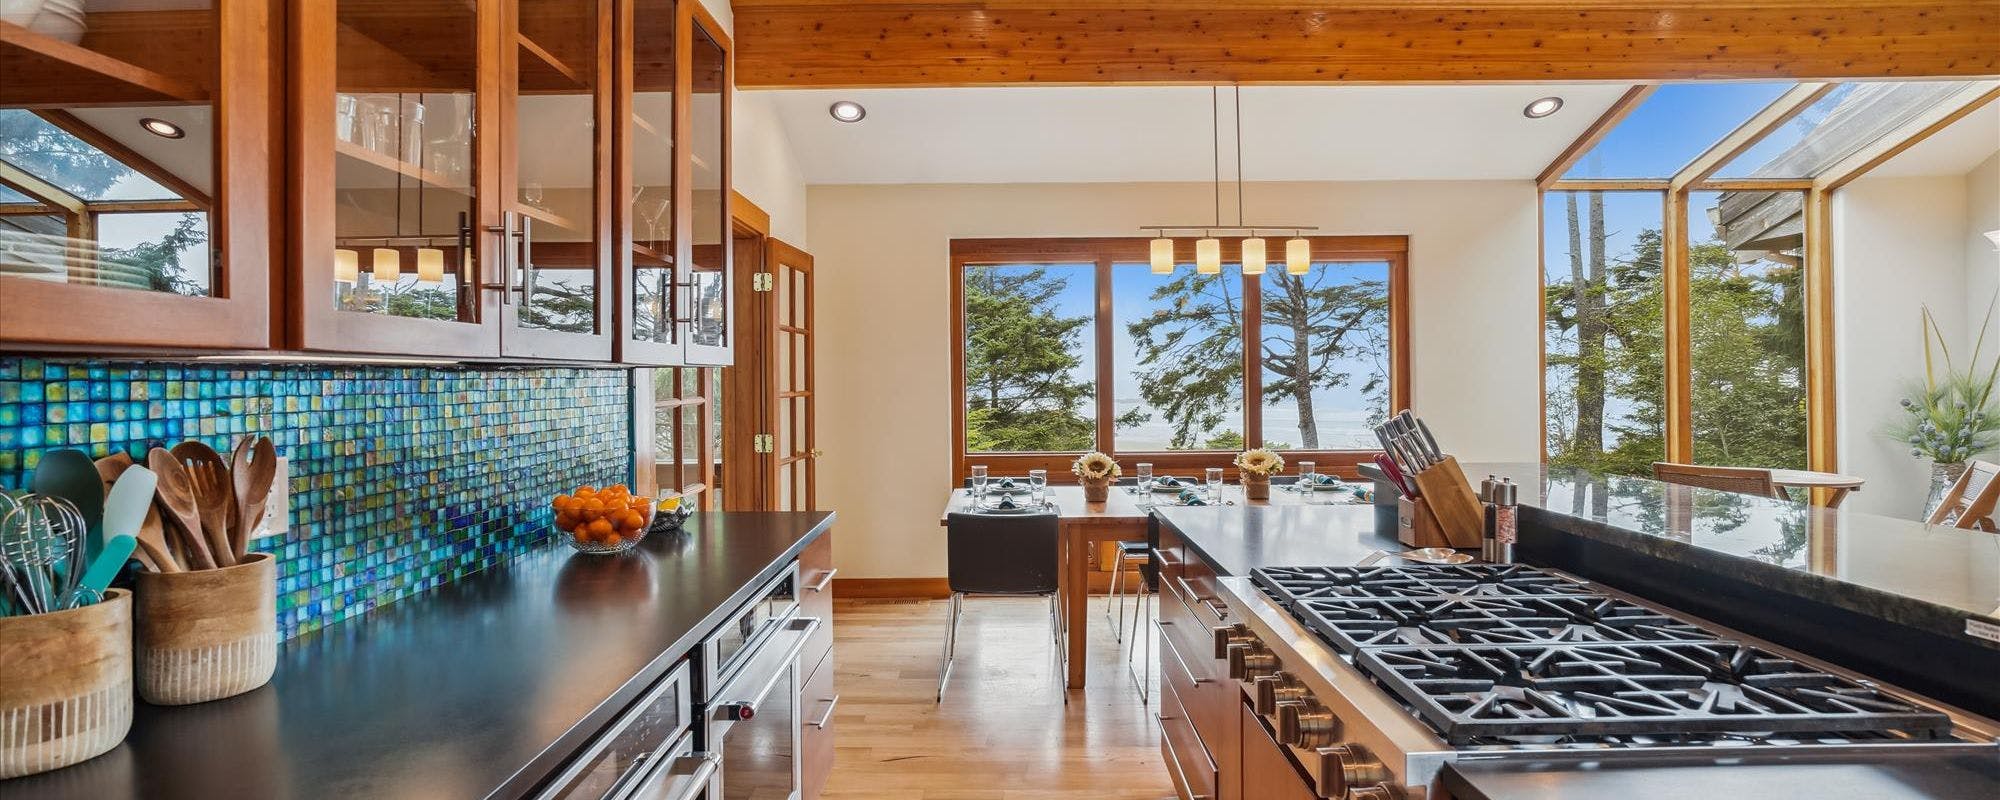 Modern kitchen at Oregon Coast vacation rental home